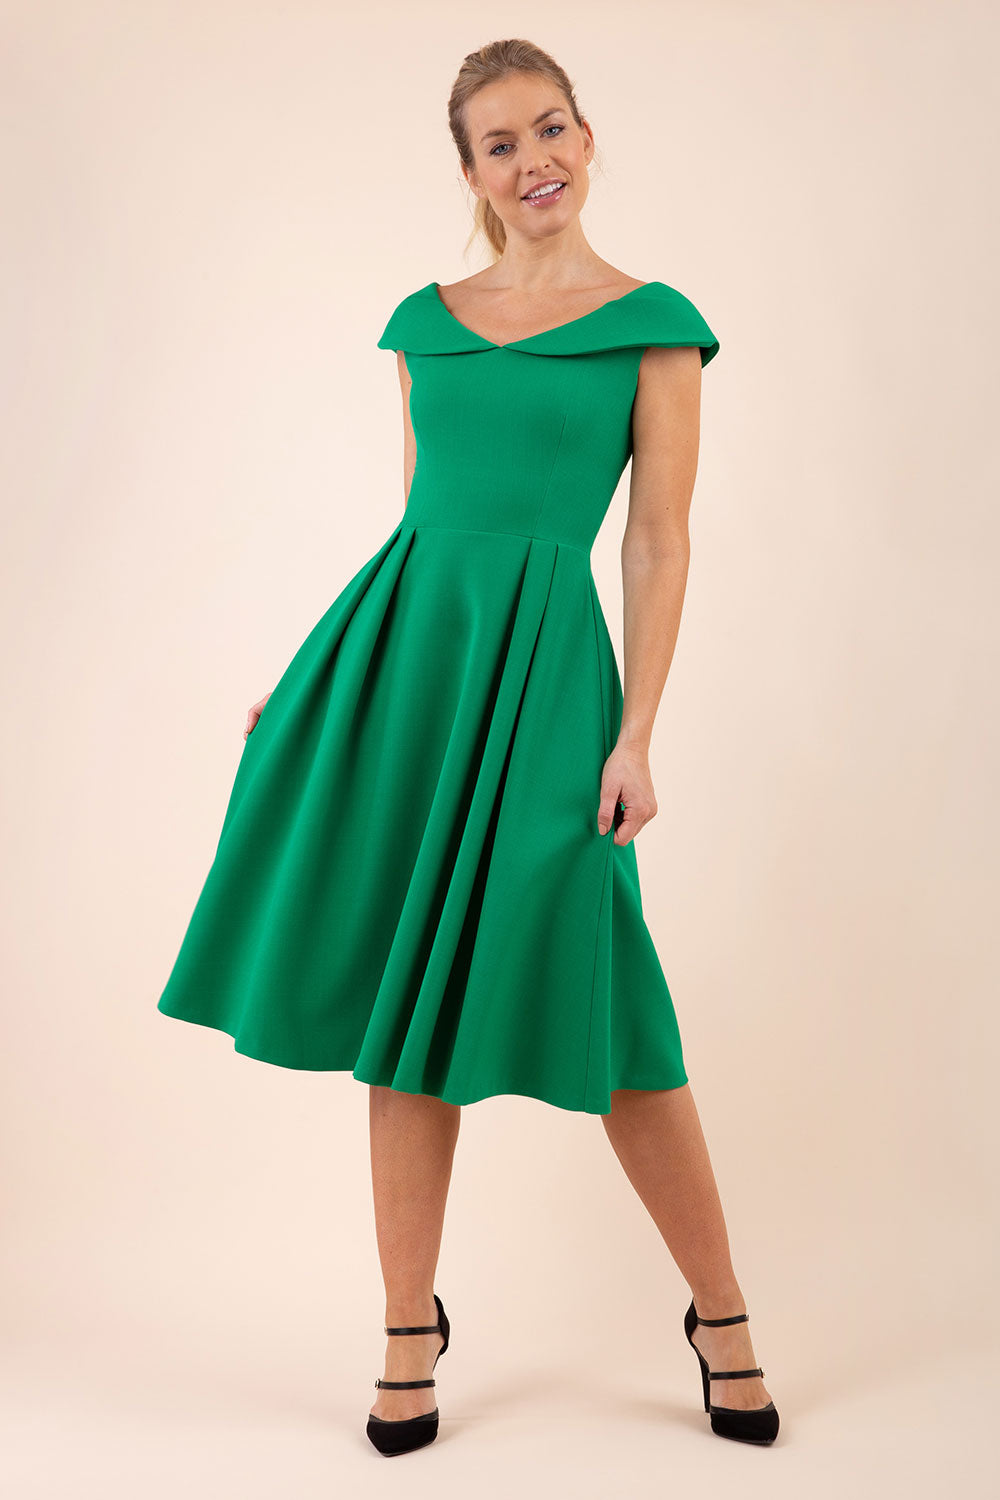 blonde model wearing diva catwalk Chesterton a-line skirt Swing Sleeveless dress in emerald green front